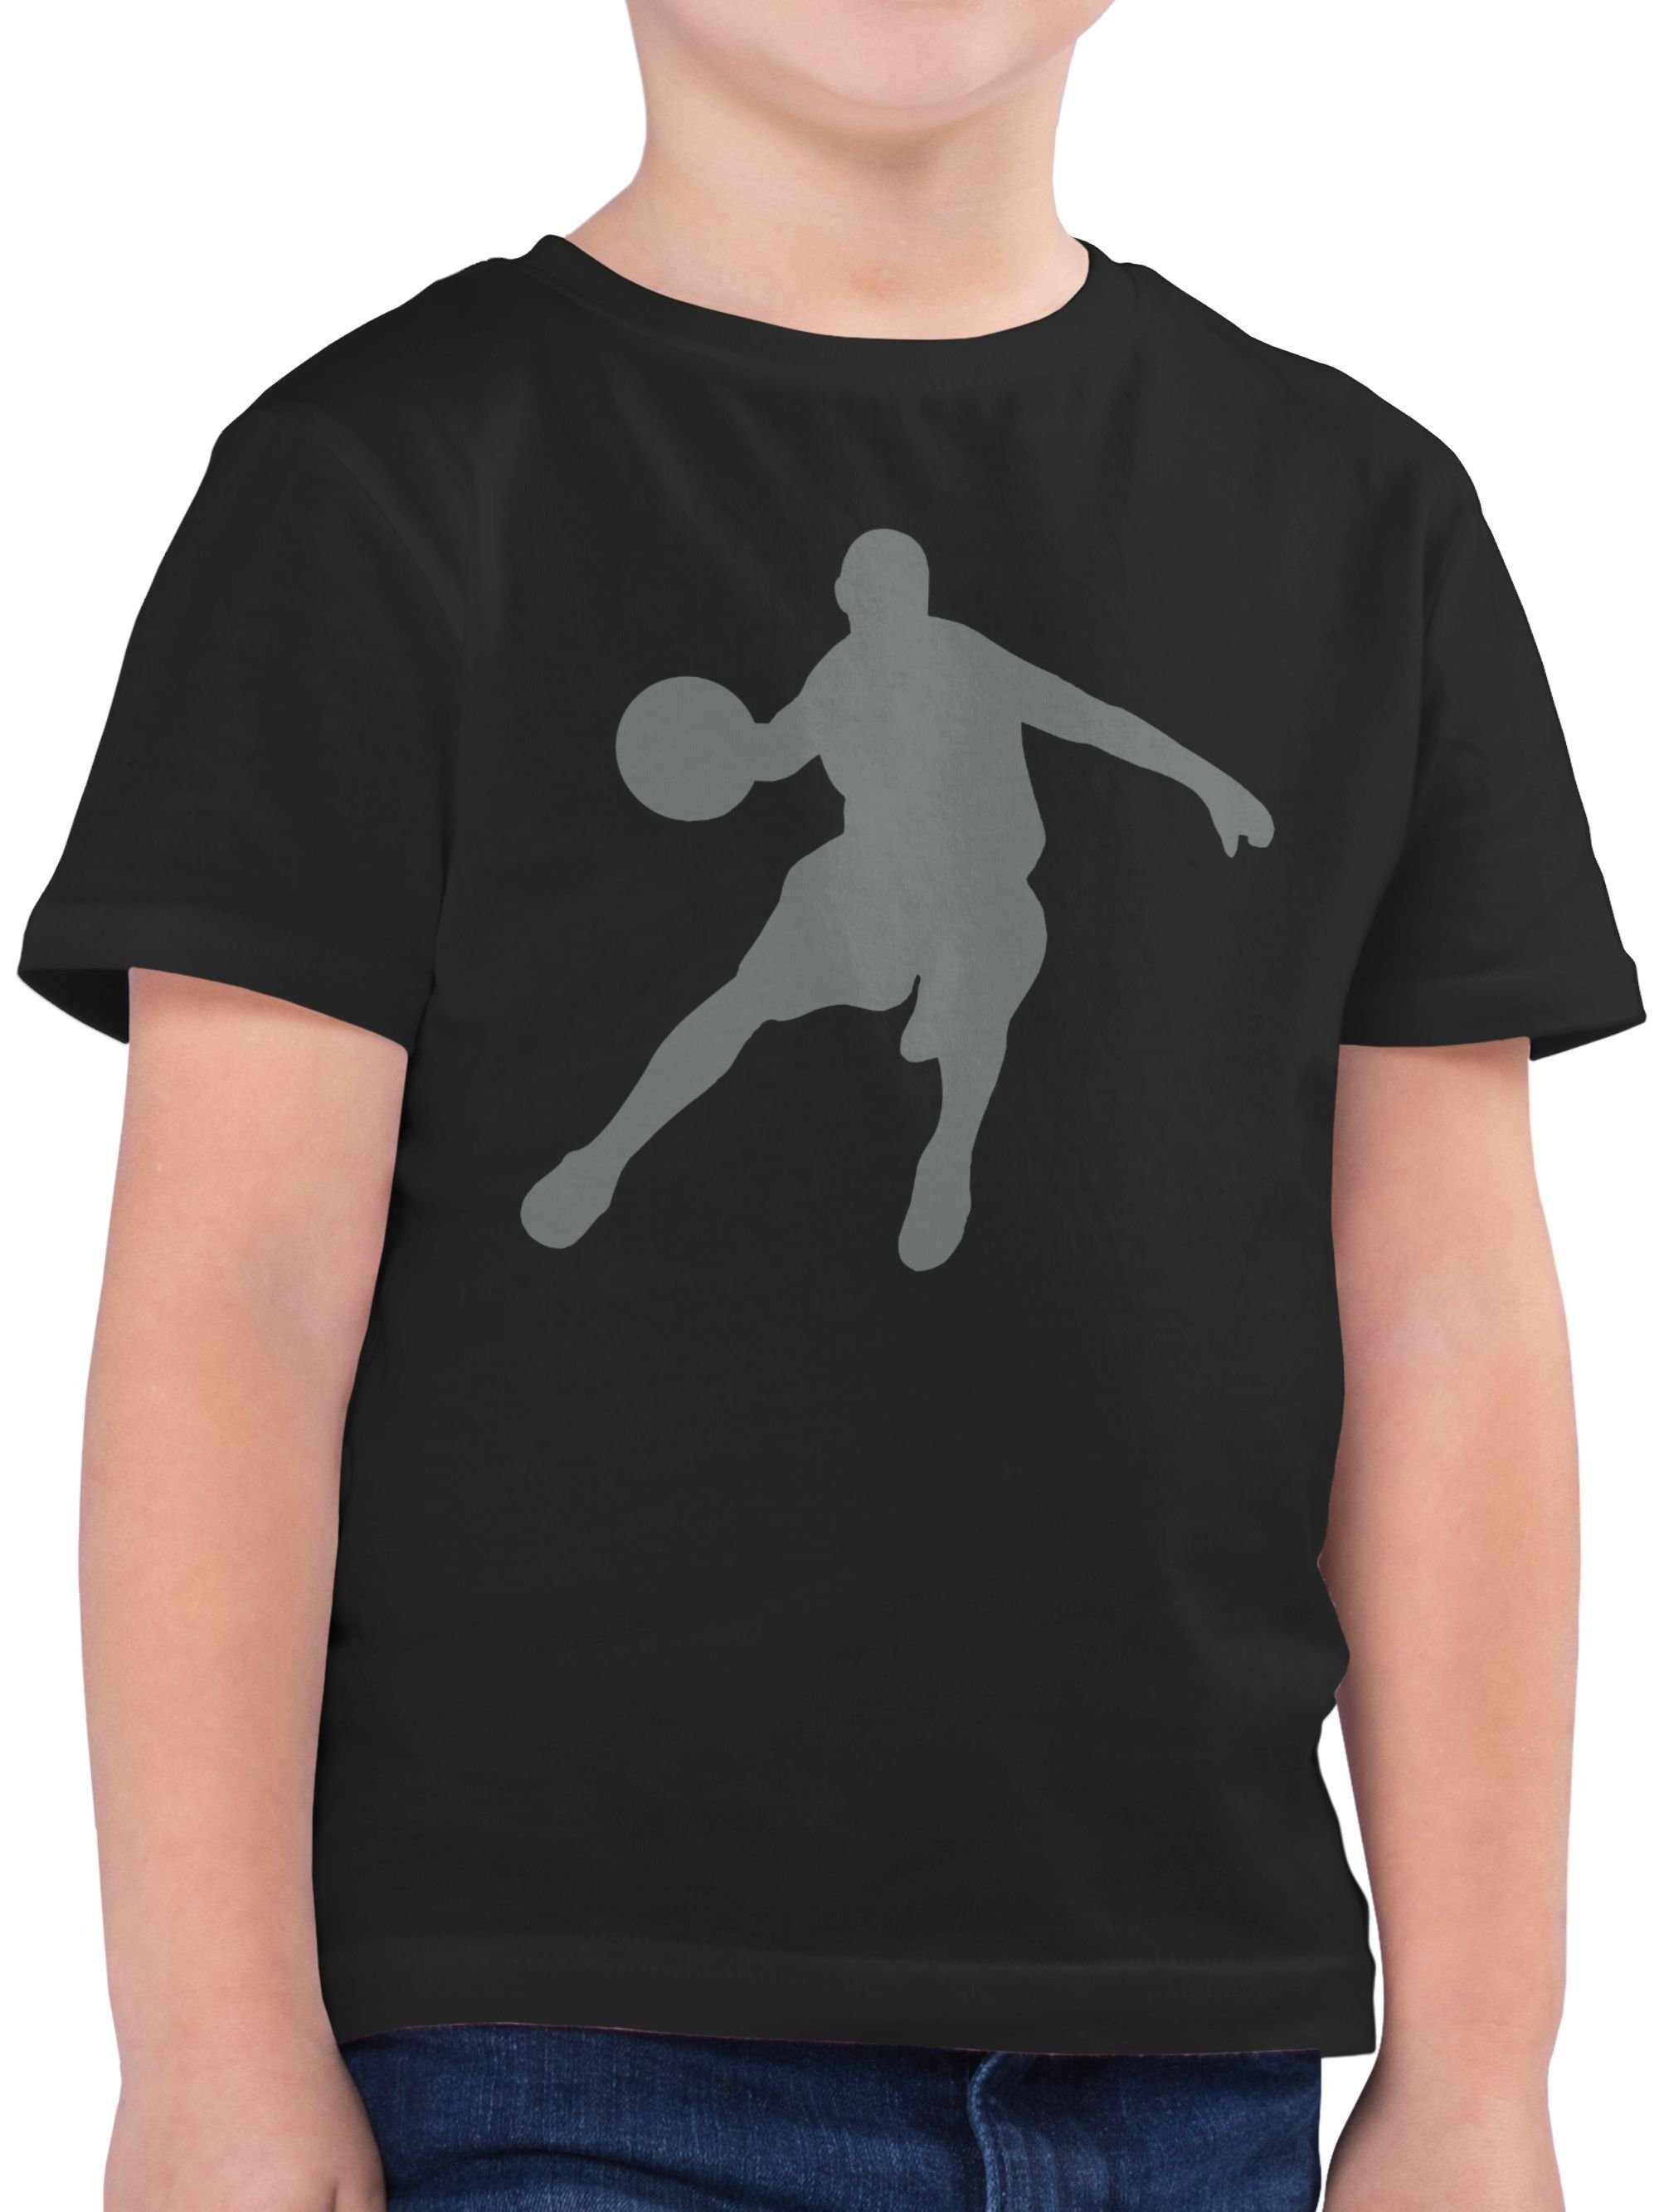 Shirtracer T-Shirt Basketballspieler Kinder Sport Kleidung 01 Schwarz